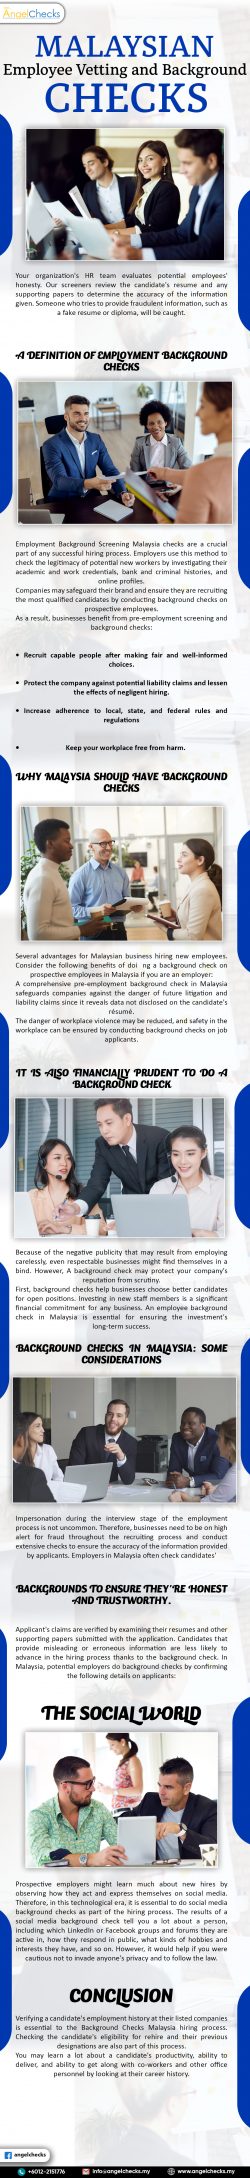 Malaysian Employee Vetting and Background Checks